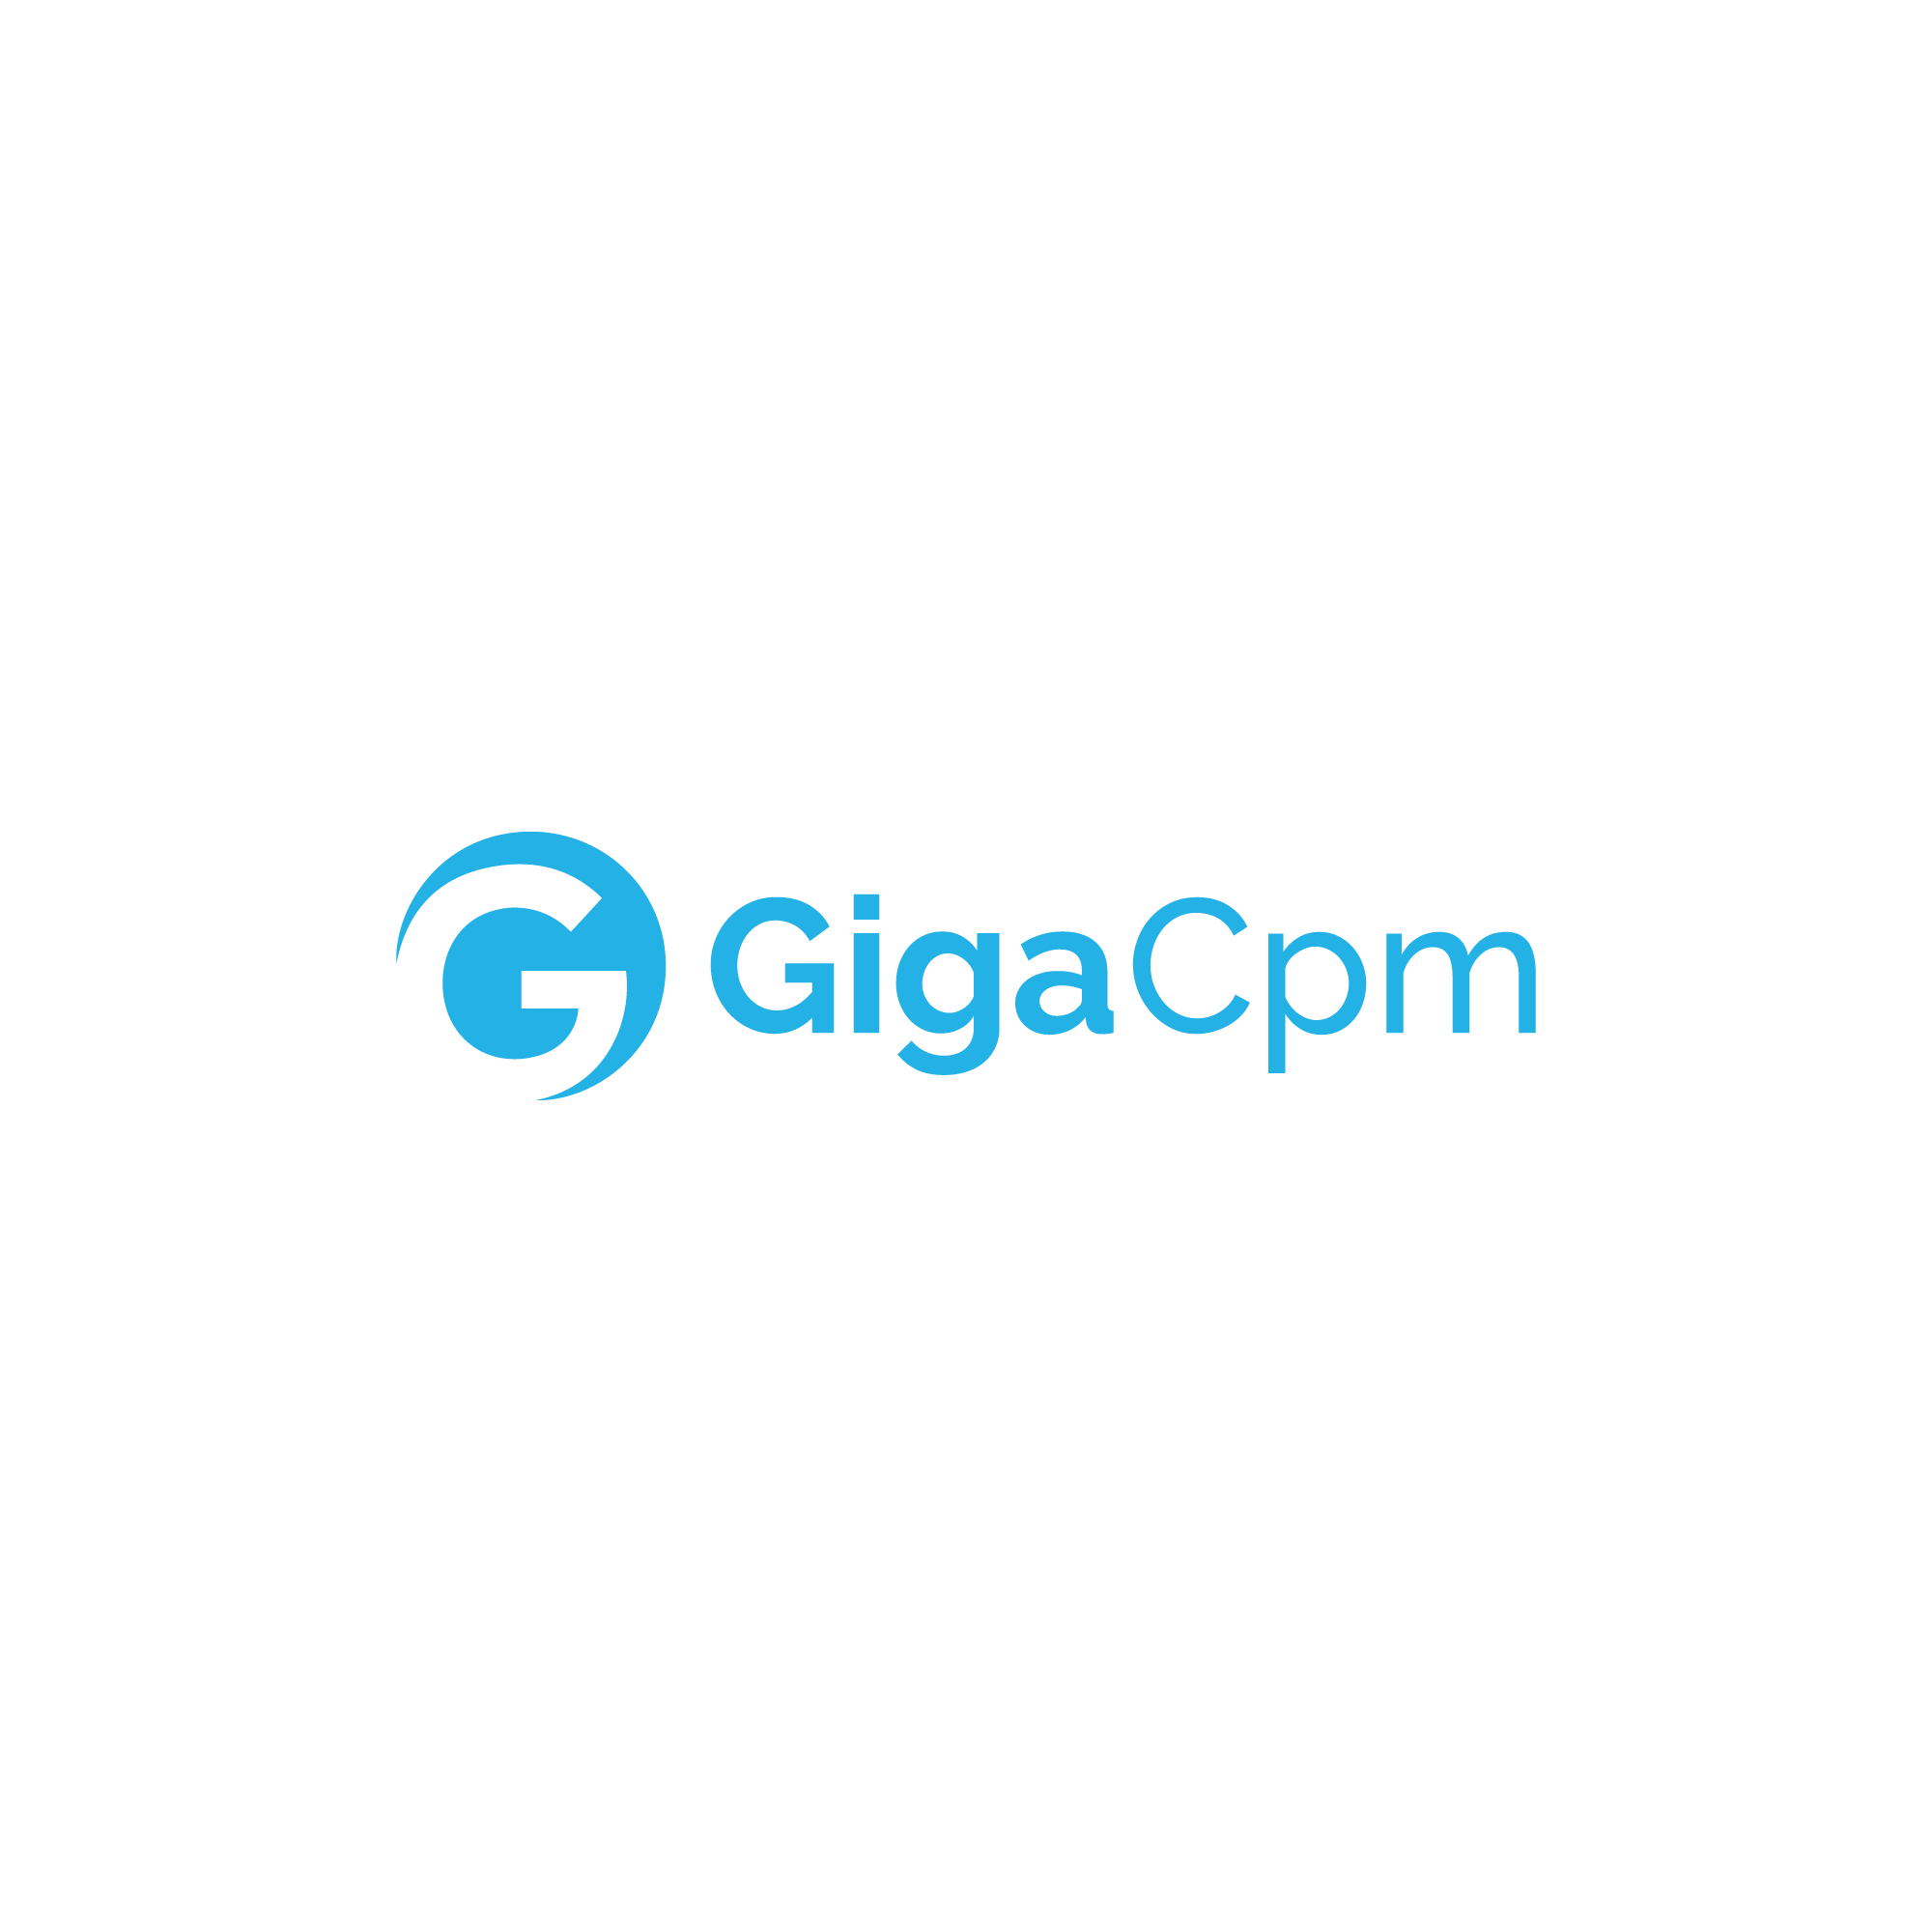 GigaCpm